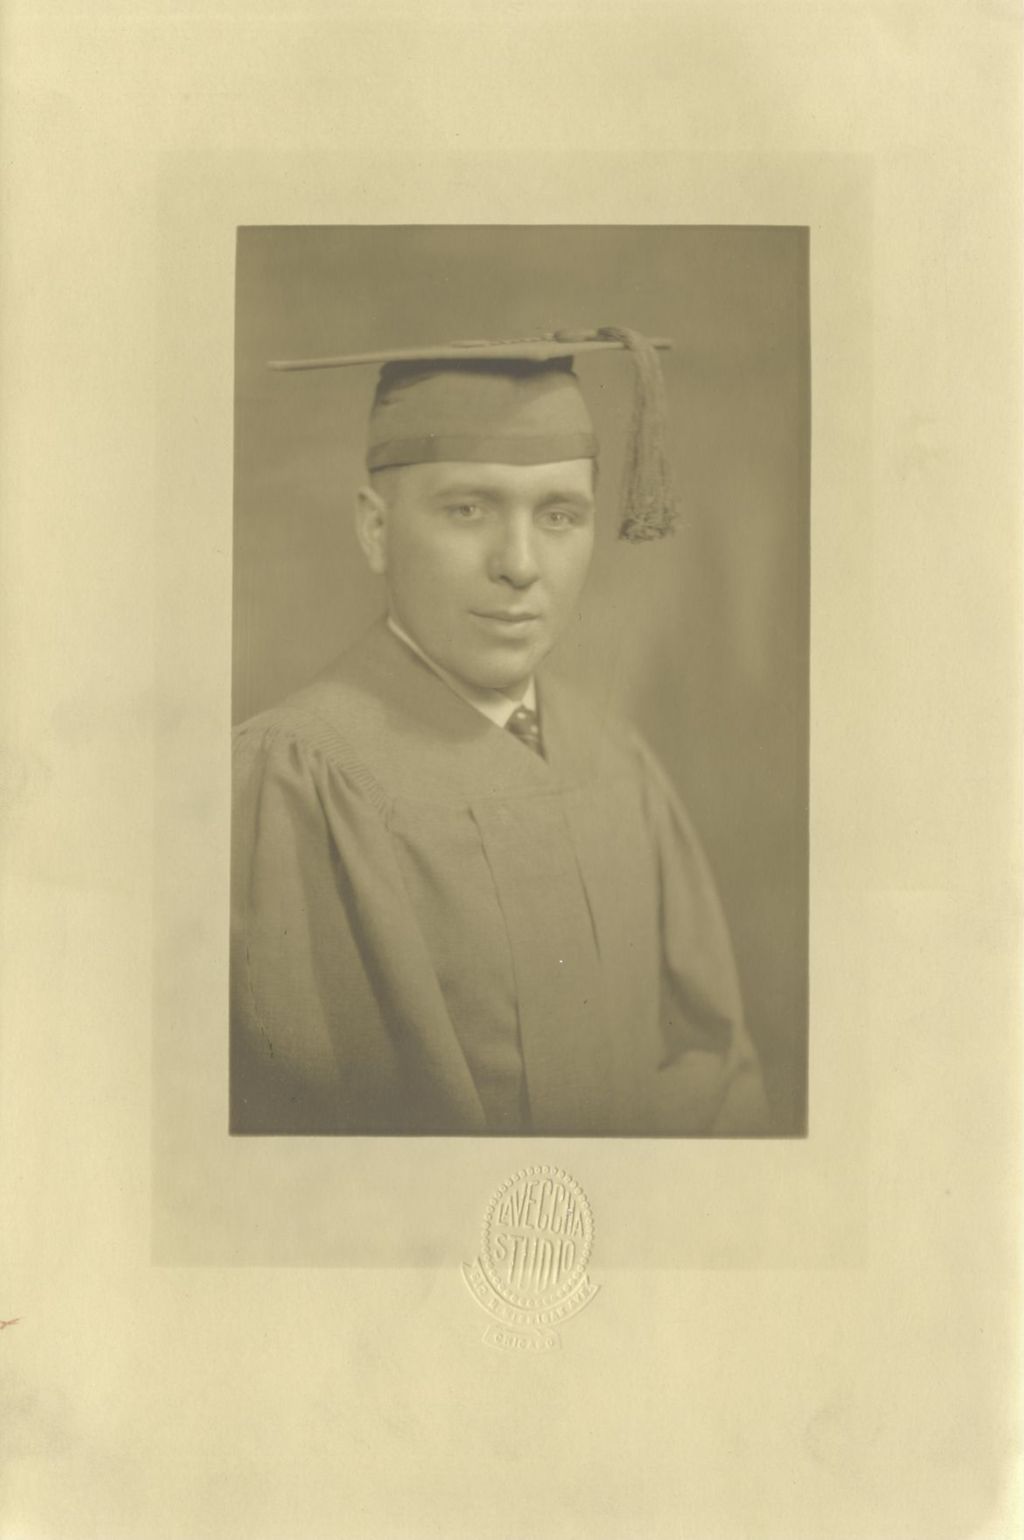 Miniature of Richard J. Daley's Law School graduation portrait